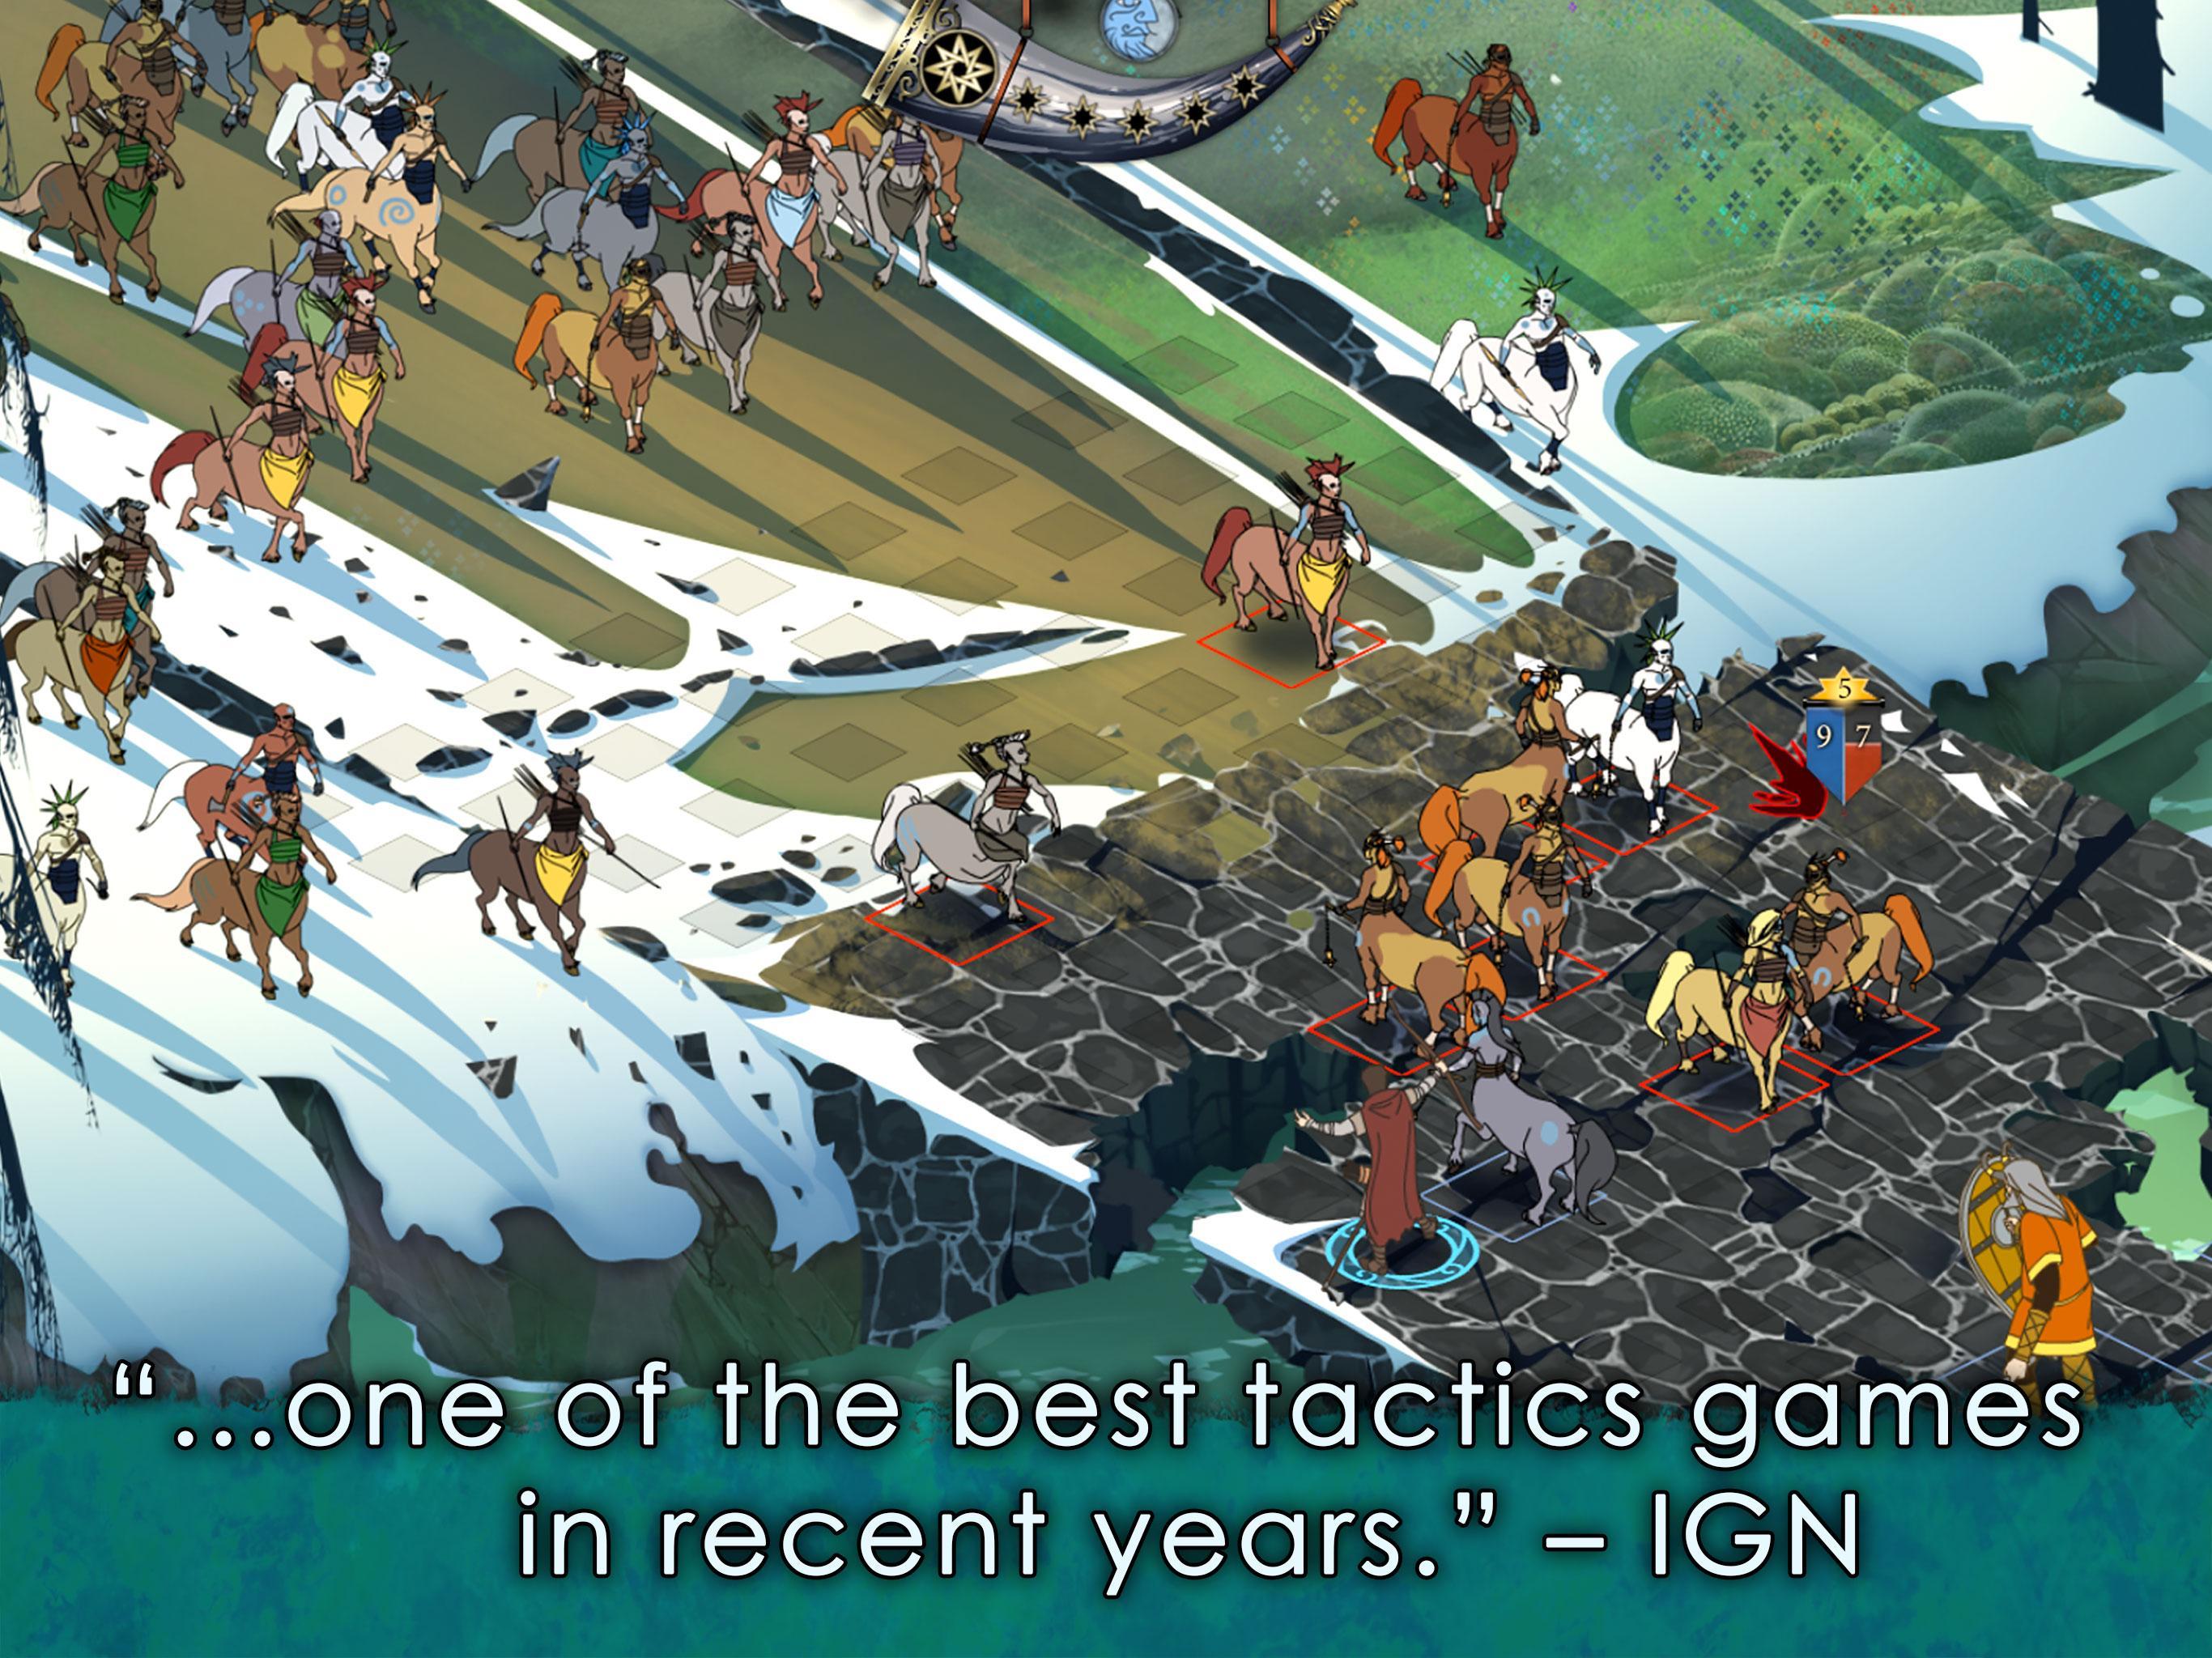 Screenshot of Banner Saga 2